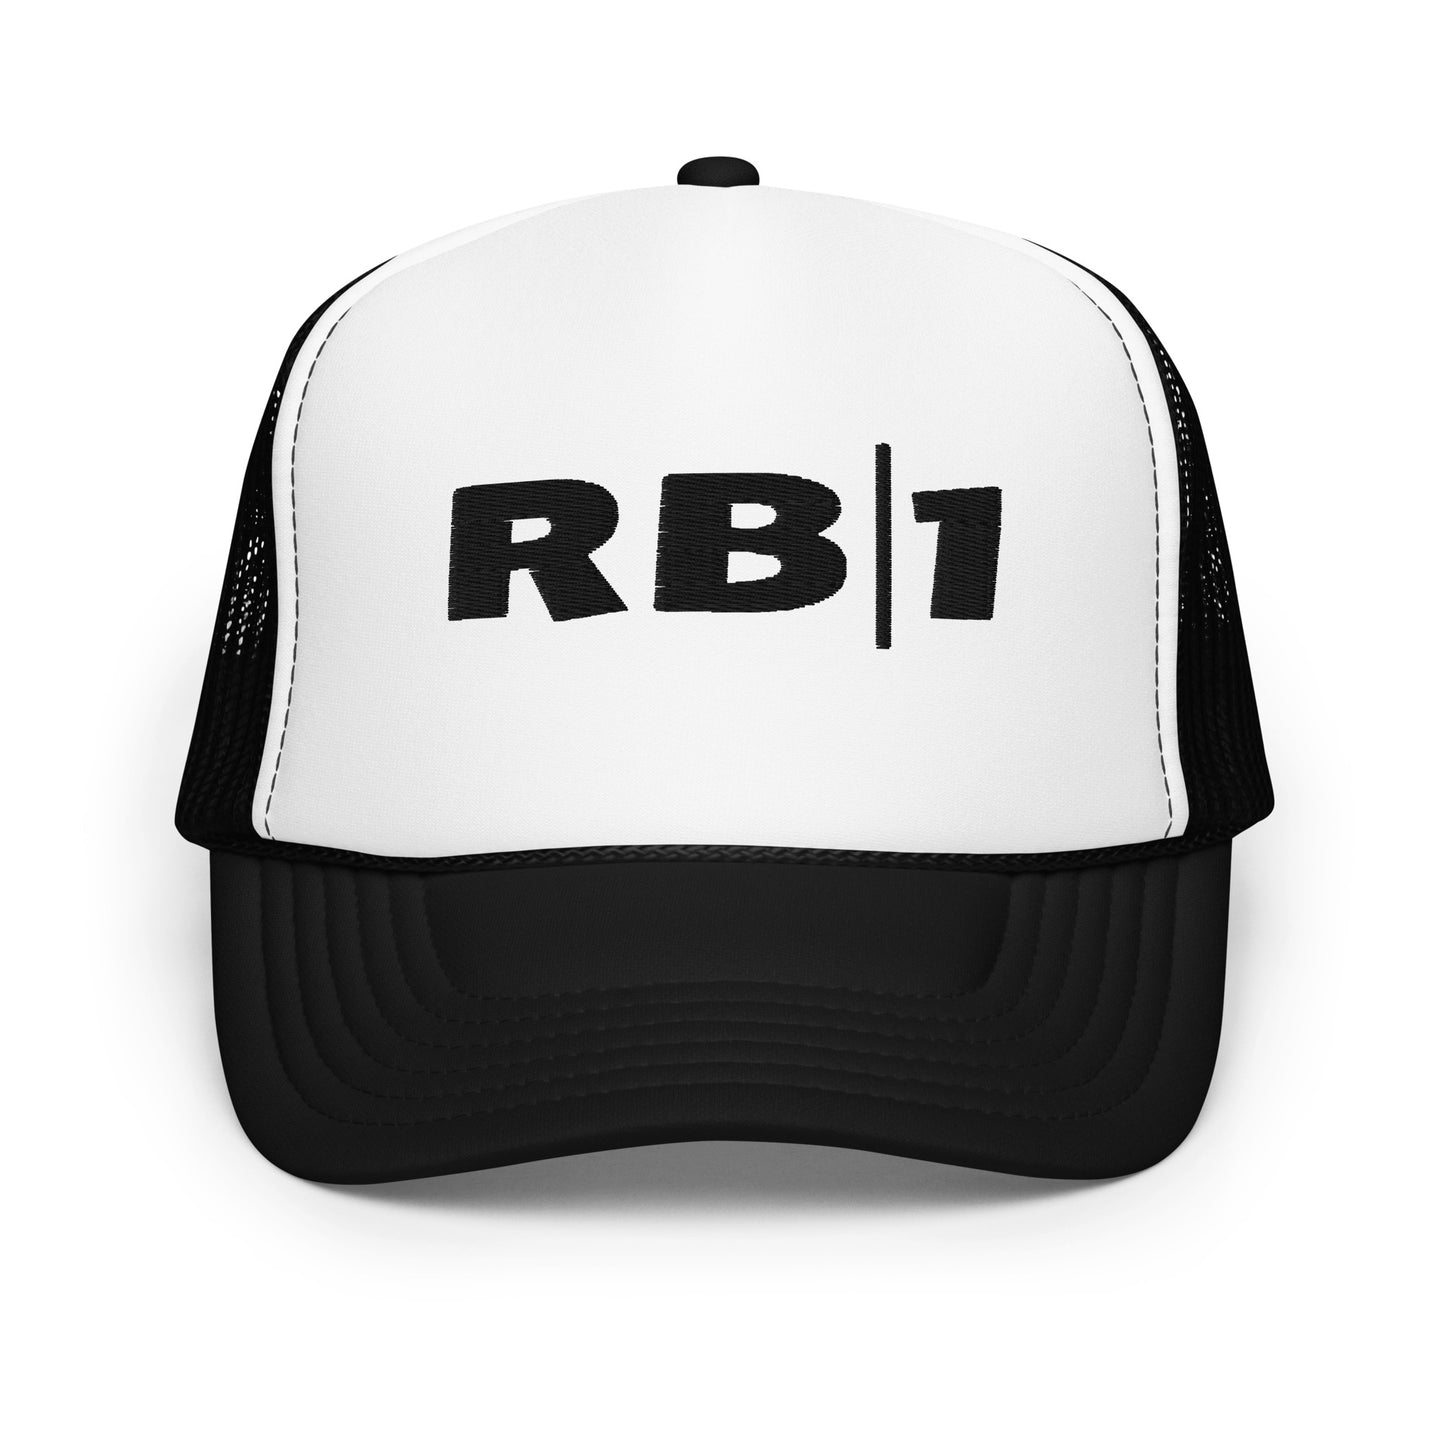 RBA - "RB|1" Hat Balck Logo